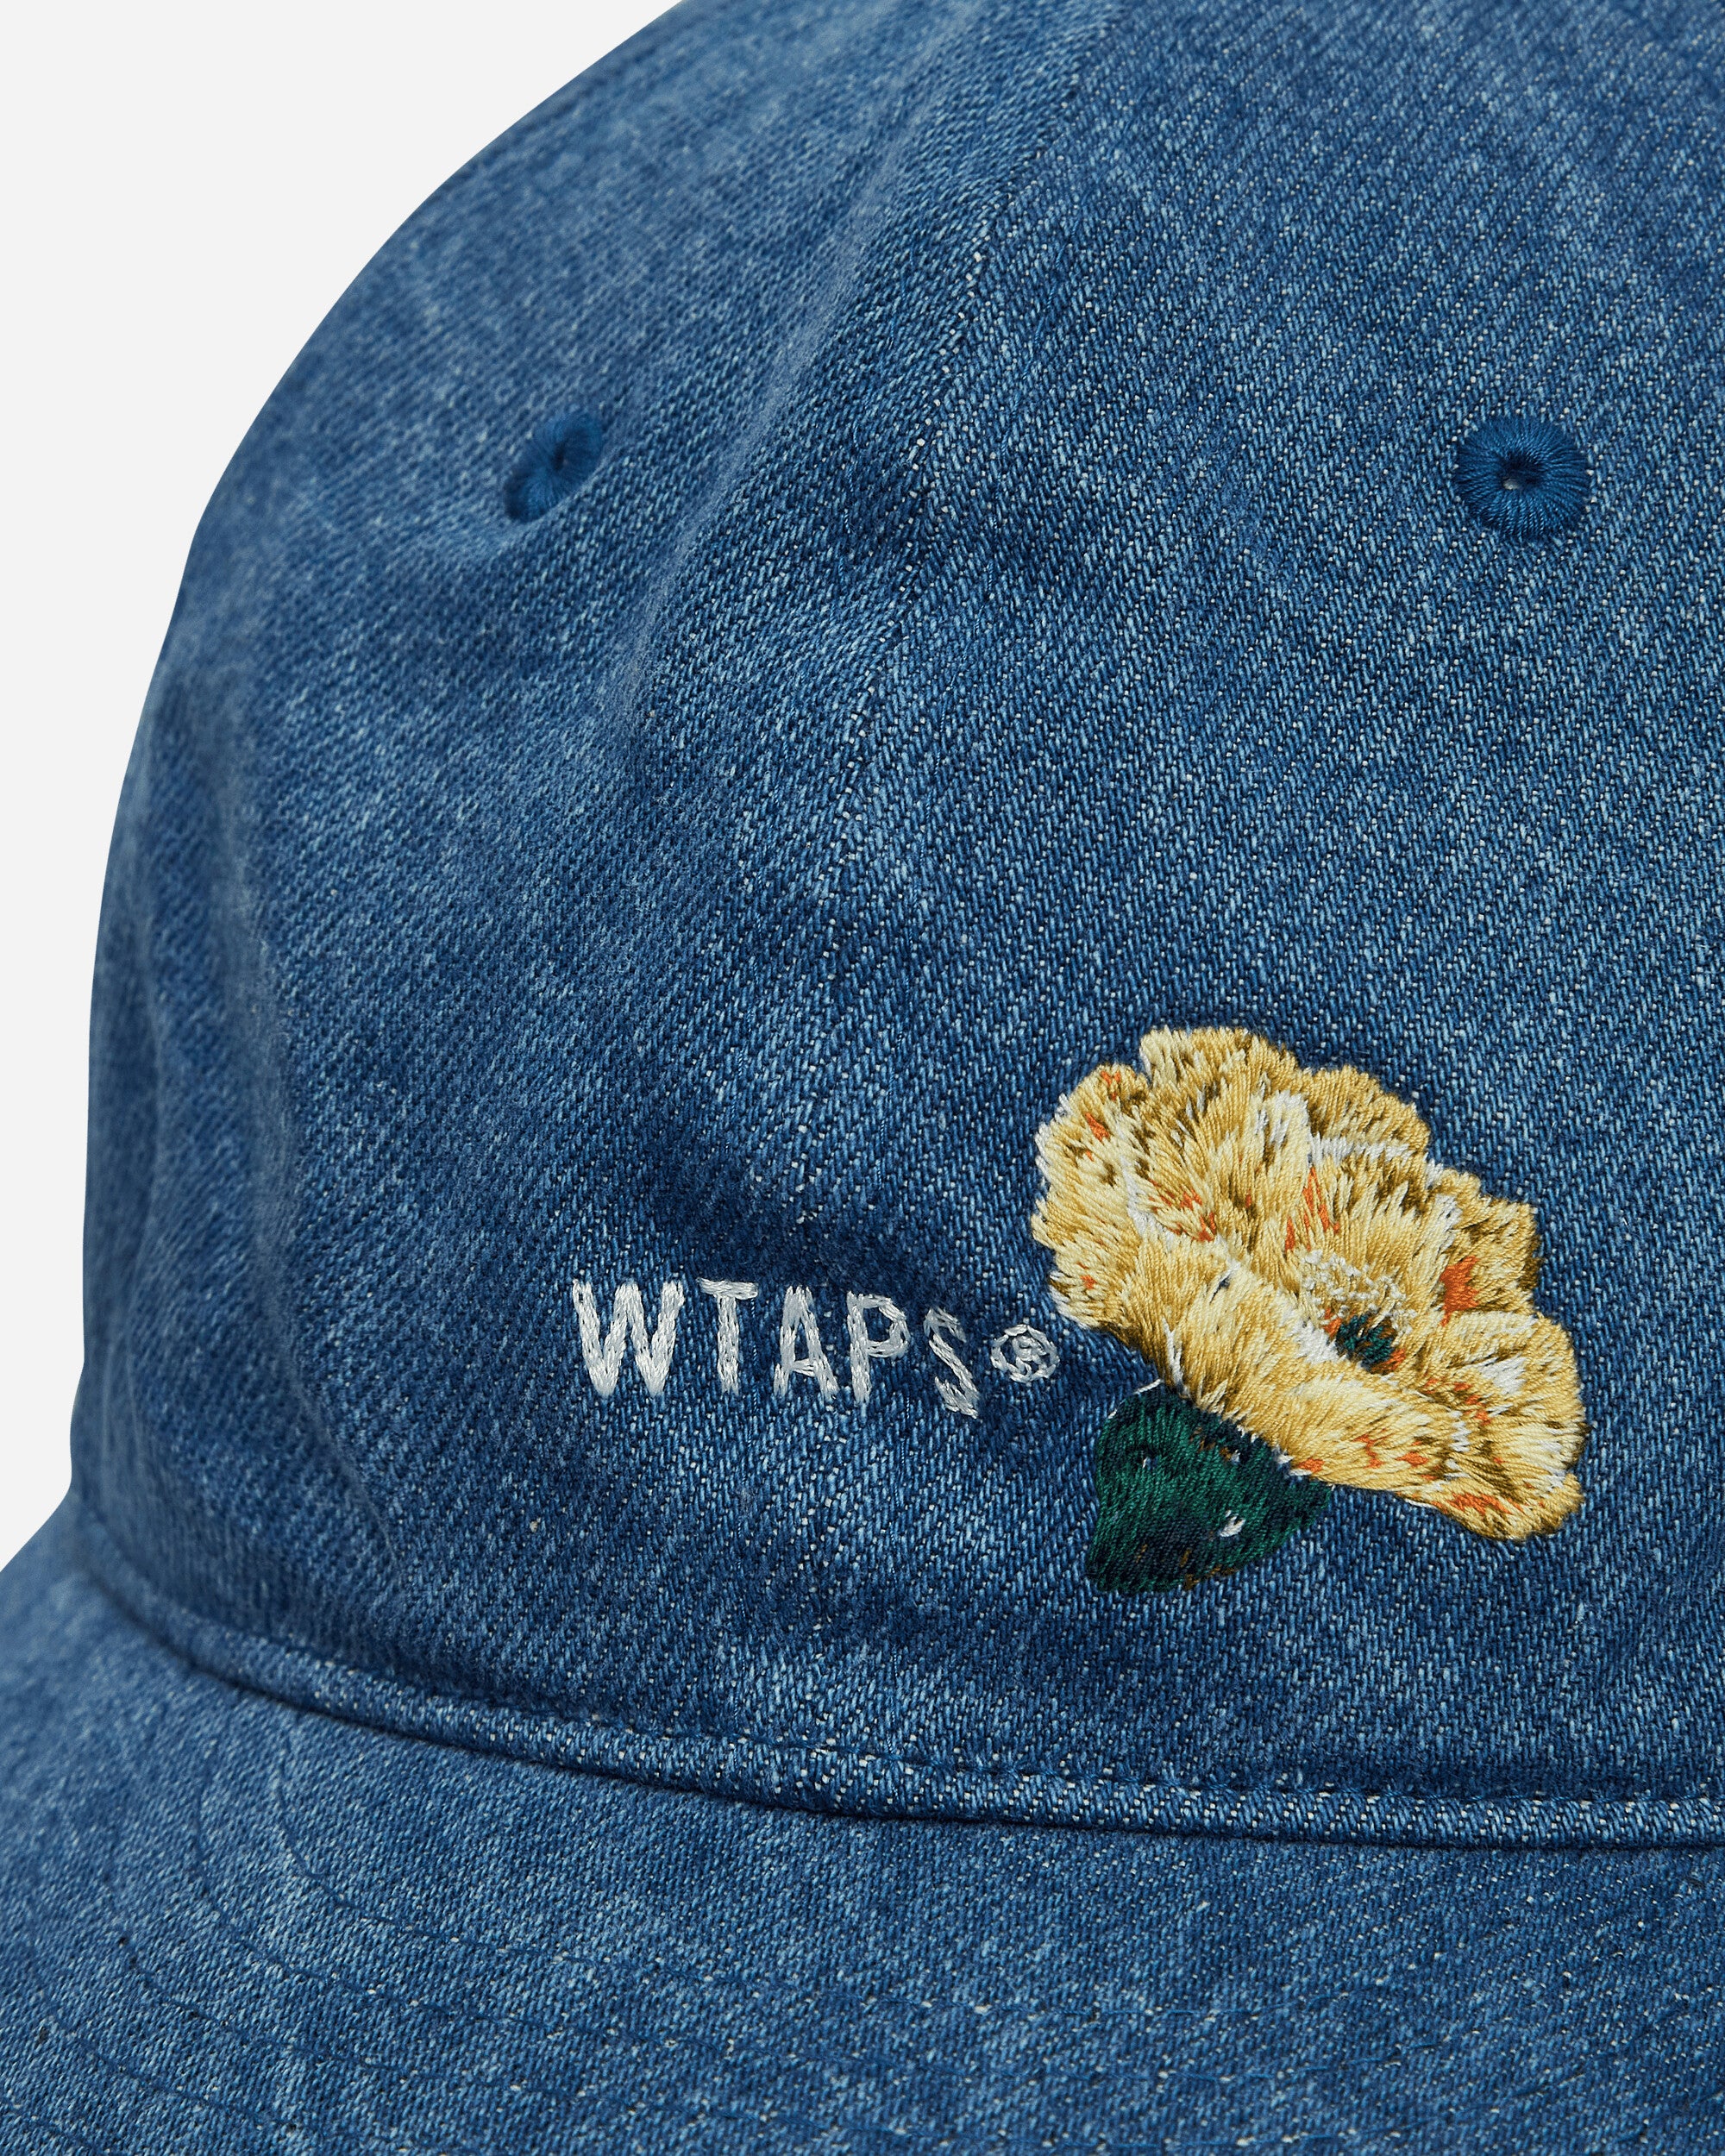 WTAPS Dt Hat Cap Indigo Hats Caps 241HCDT-HT06 IDG